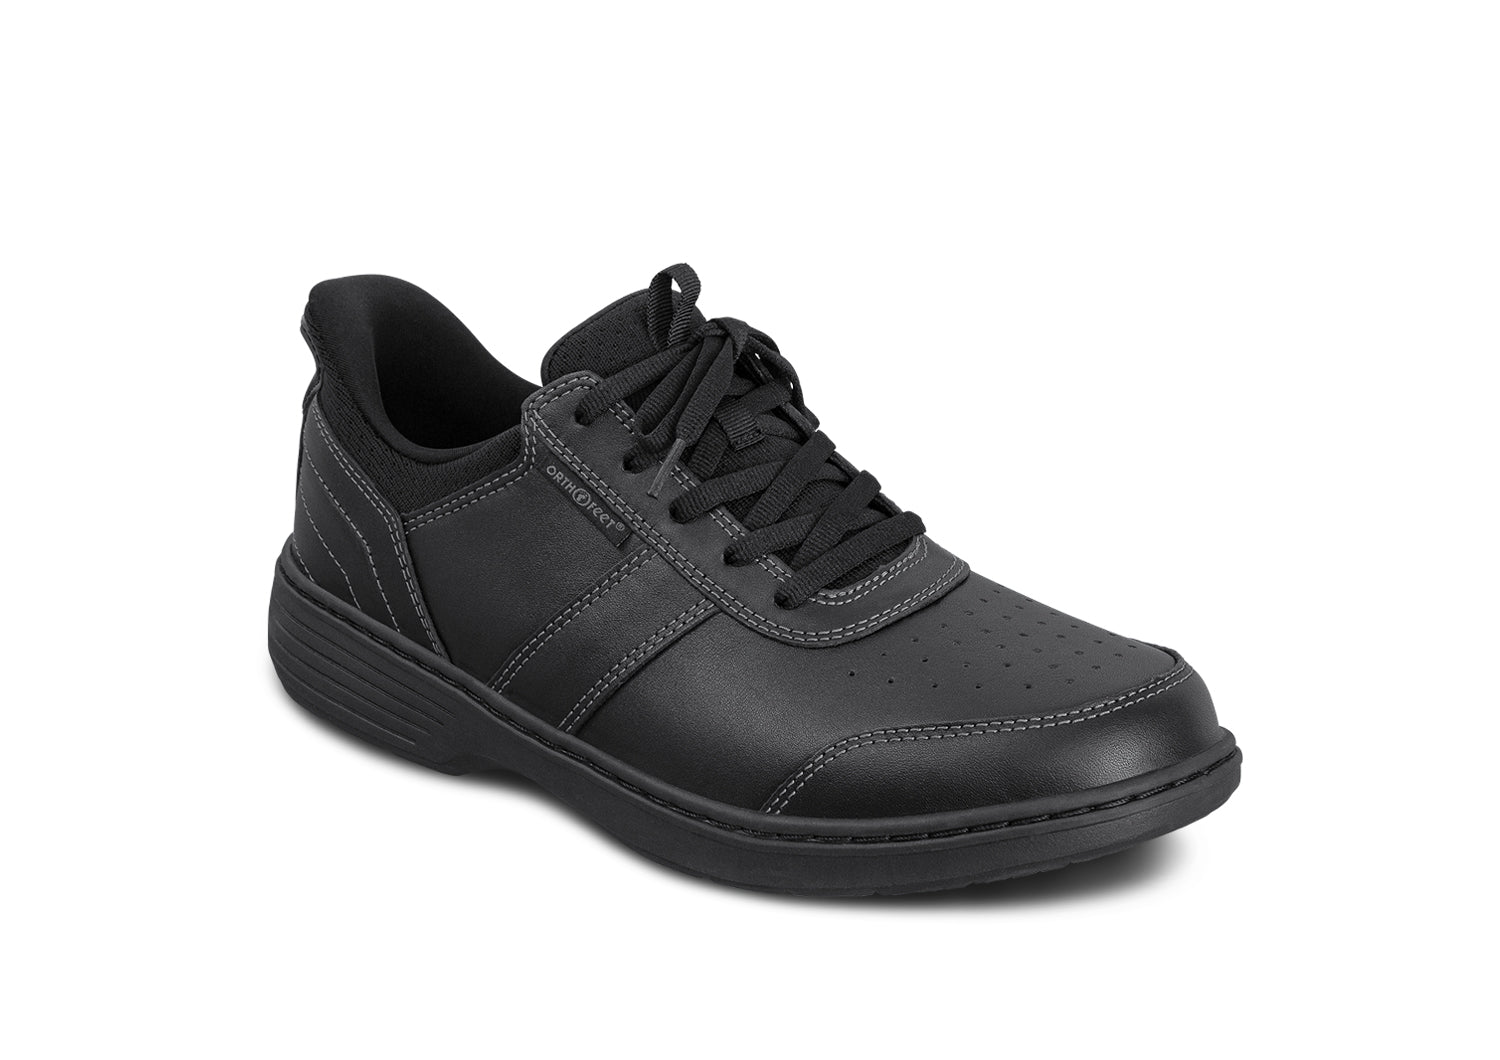 Comfort Ortho Wear Women's Shoes Size 9 - Black